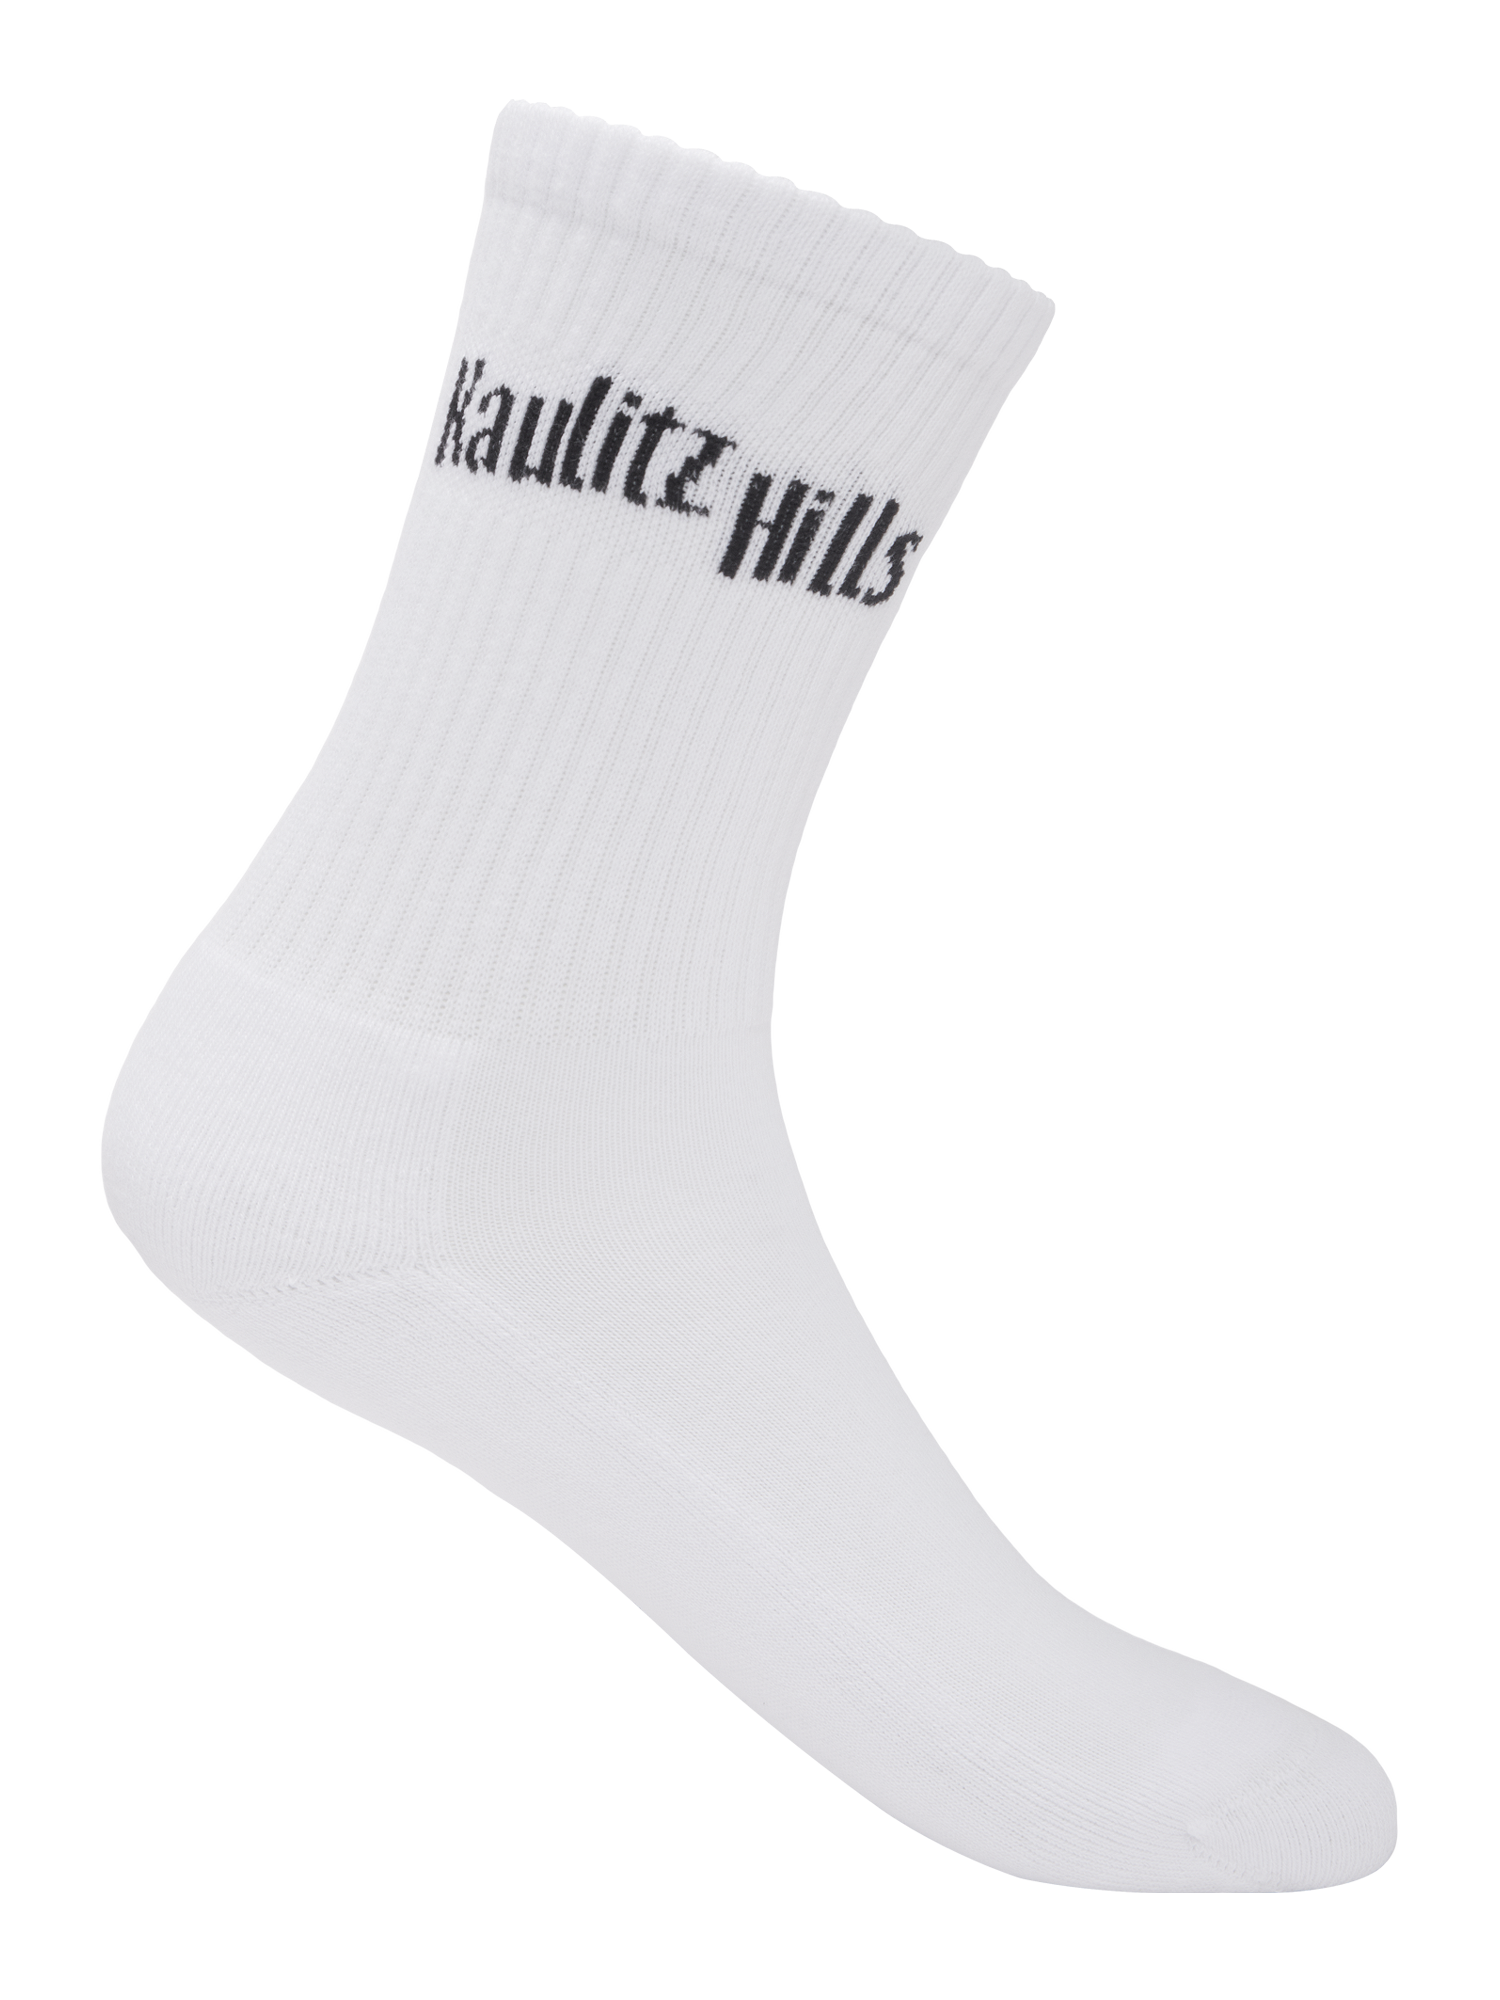 Kaulitz Hills Socken